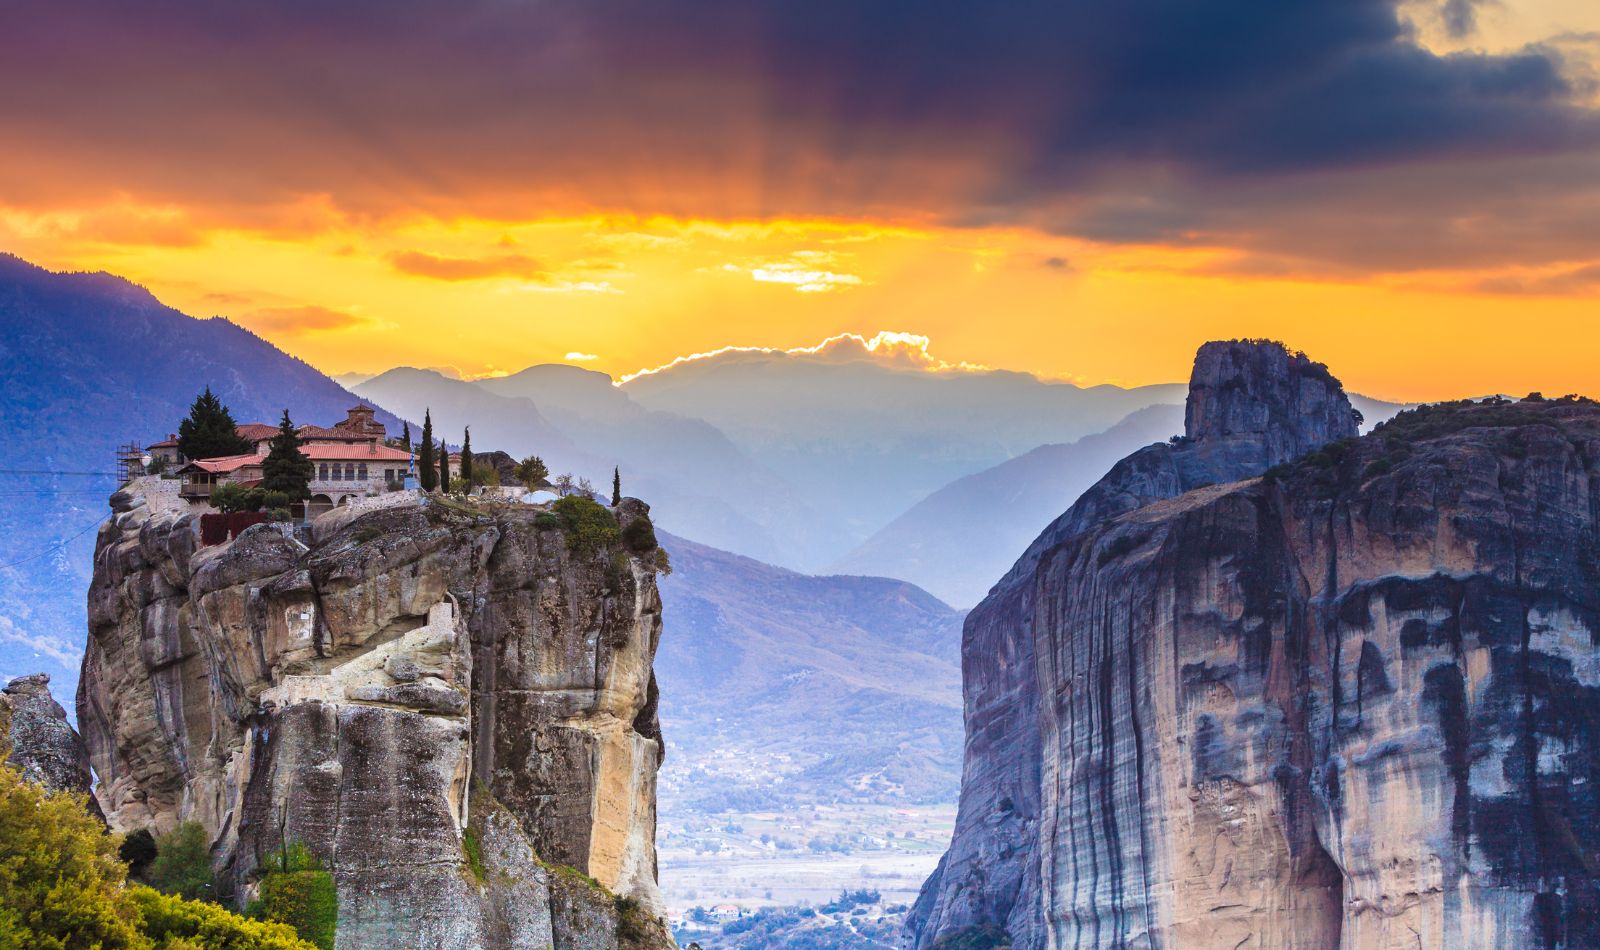 The Meteora Monasteries in Greece